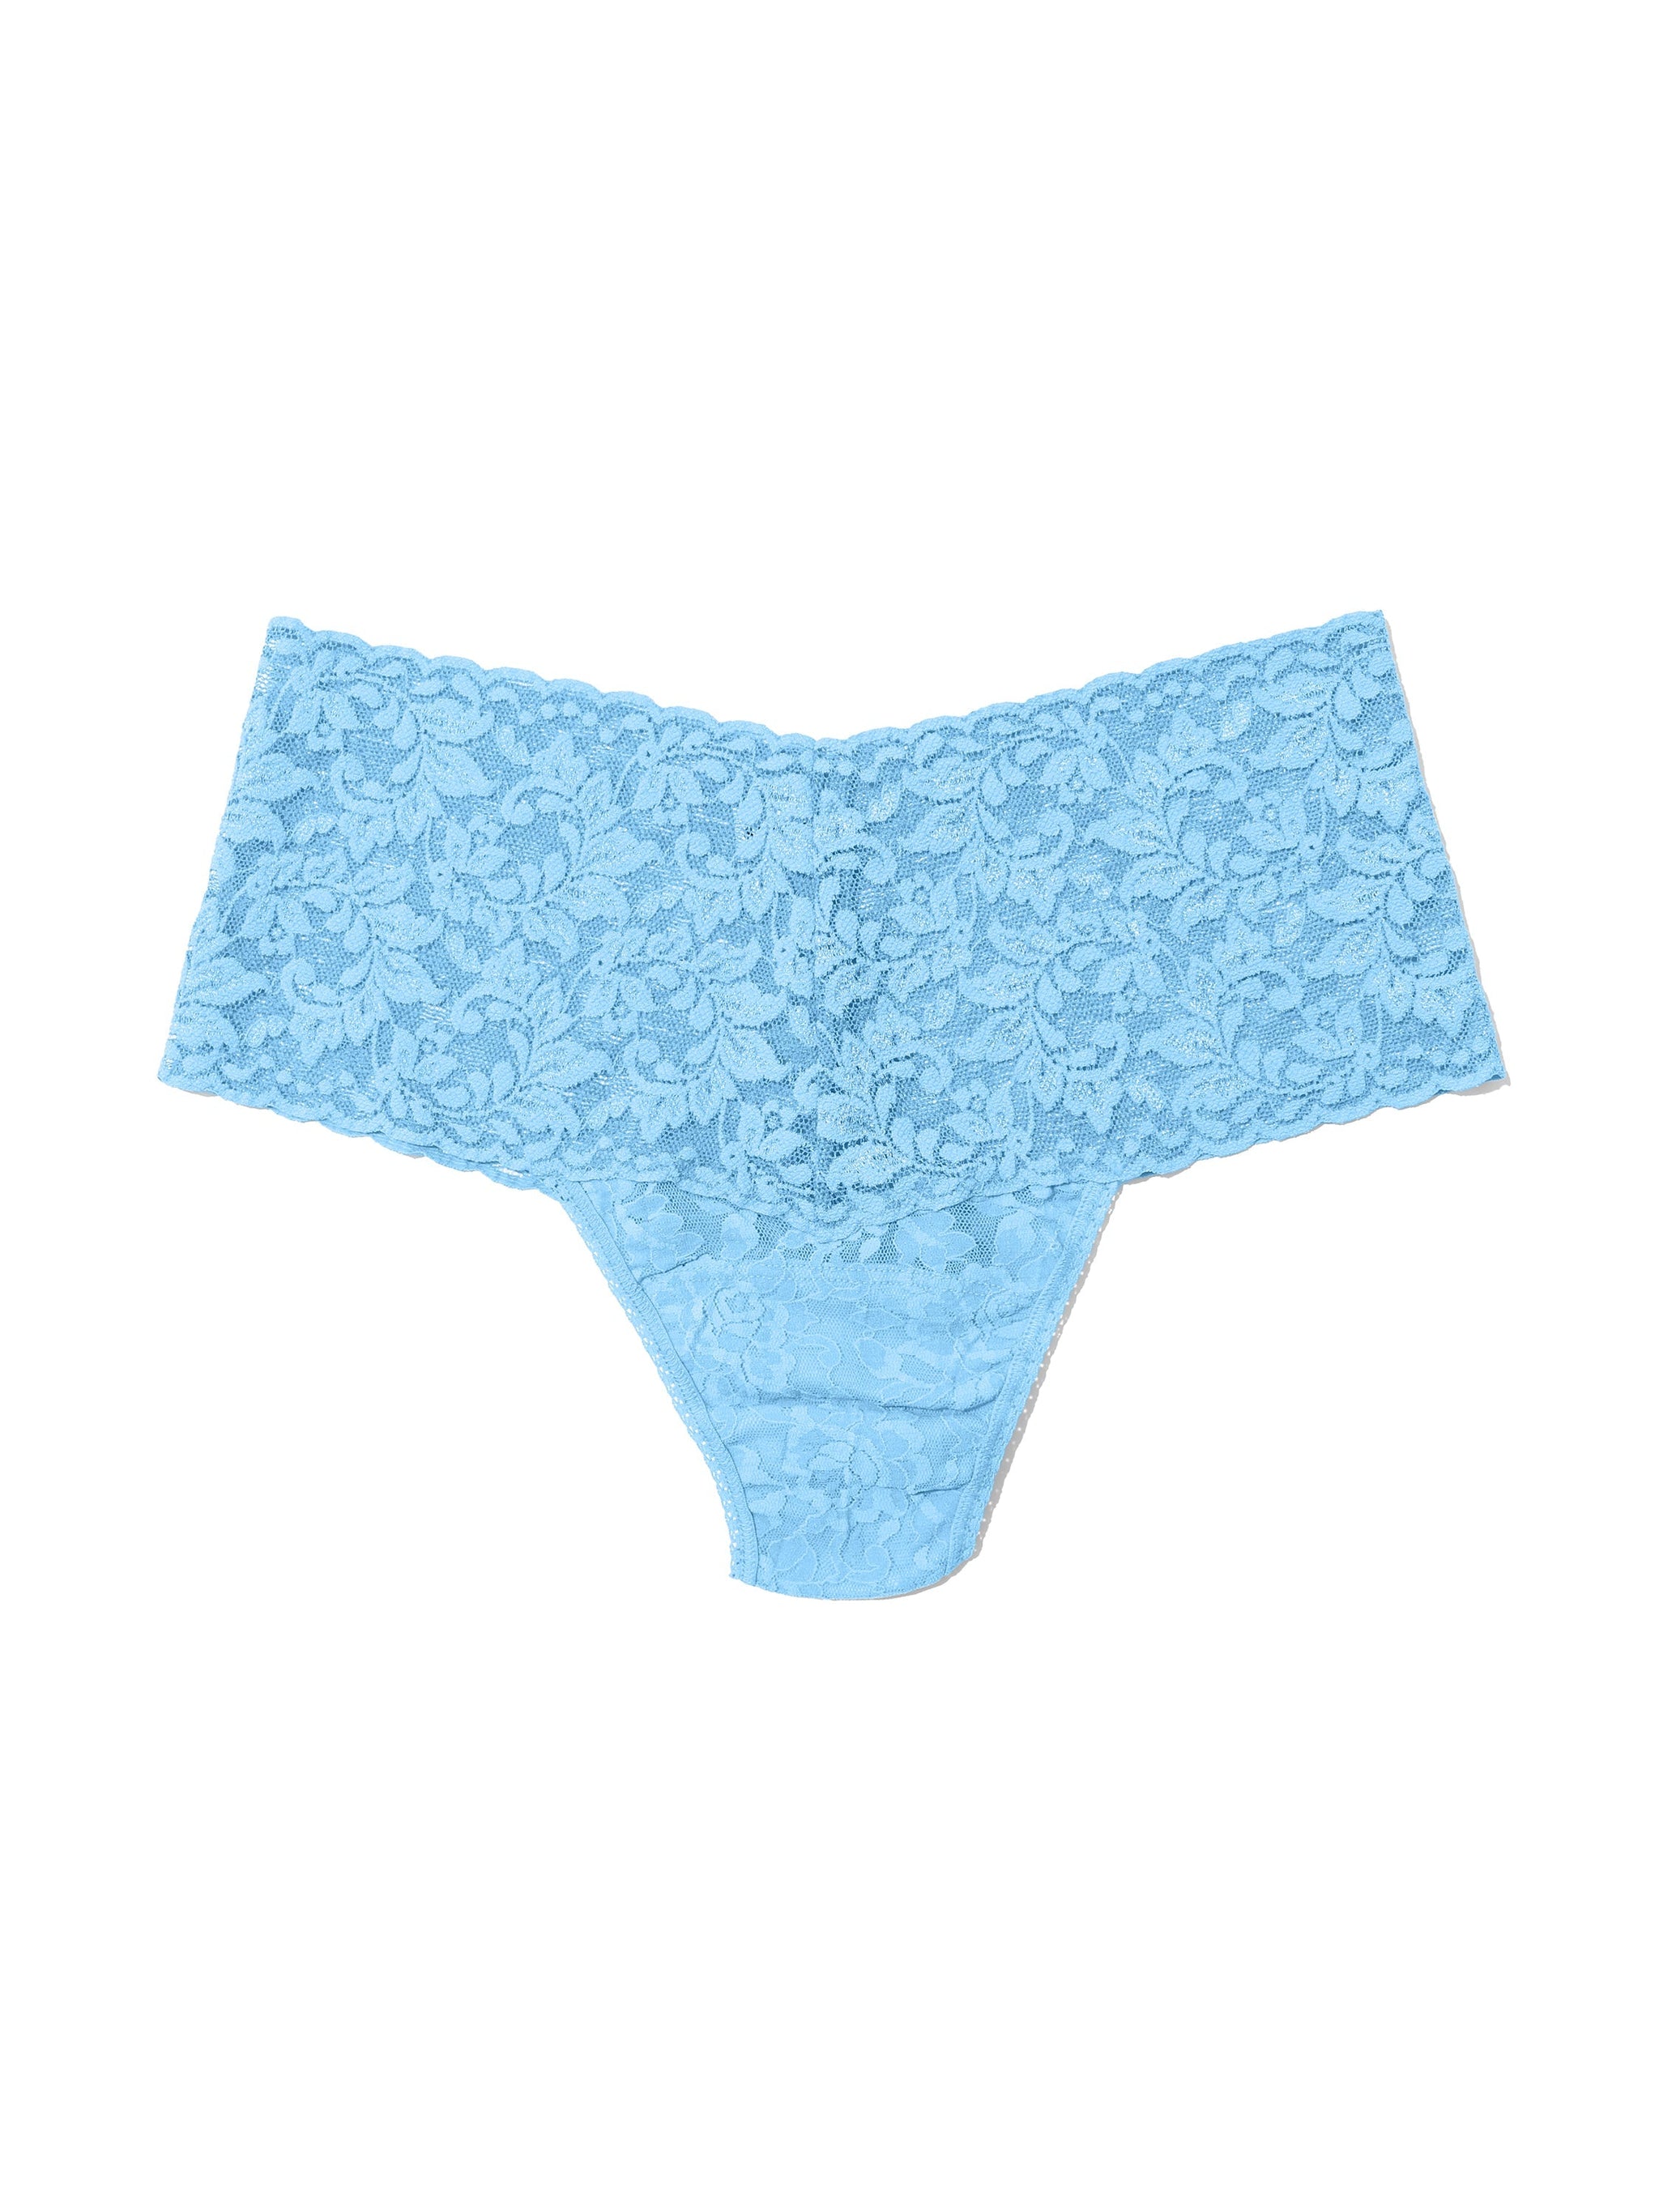 Plus Size Retro Lace Thong Partly Cloudy Blue Sale